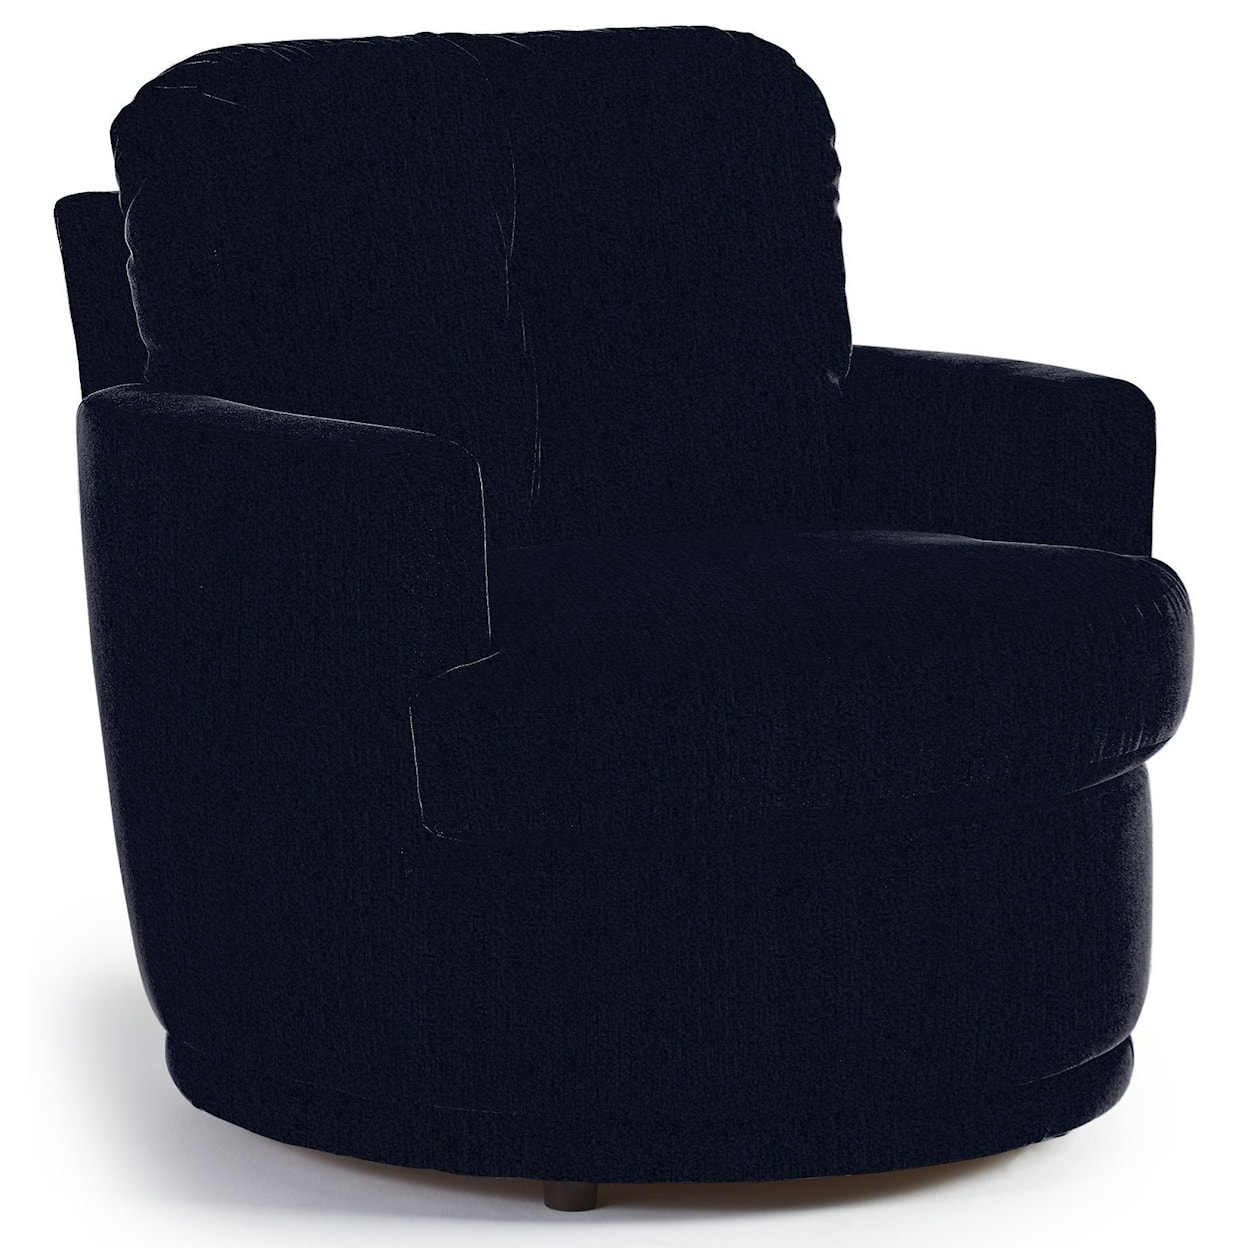 Best Home Furnishings Swivel Barrel Chairs Swivel Chair